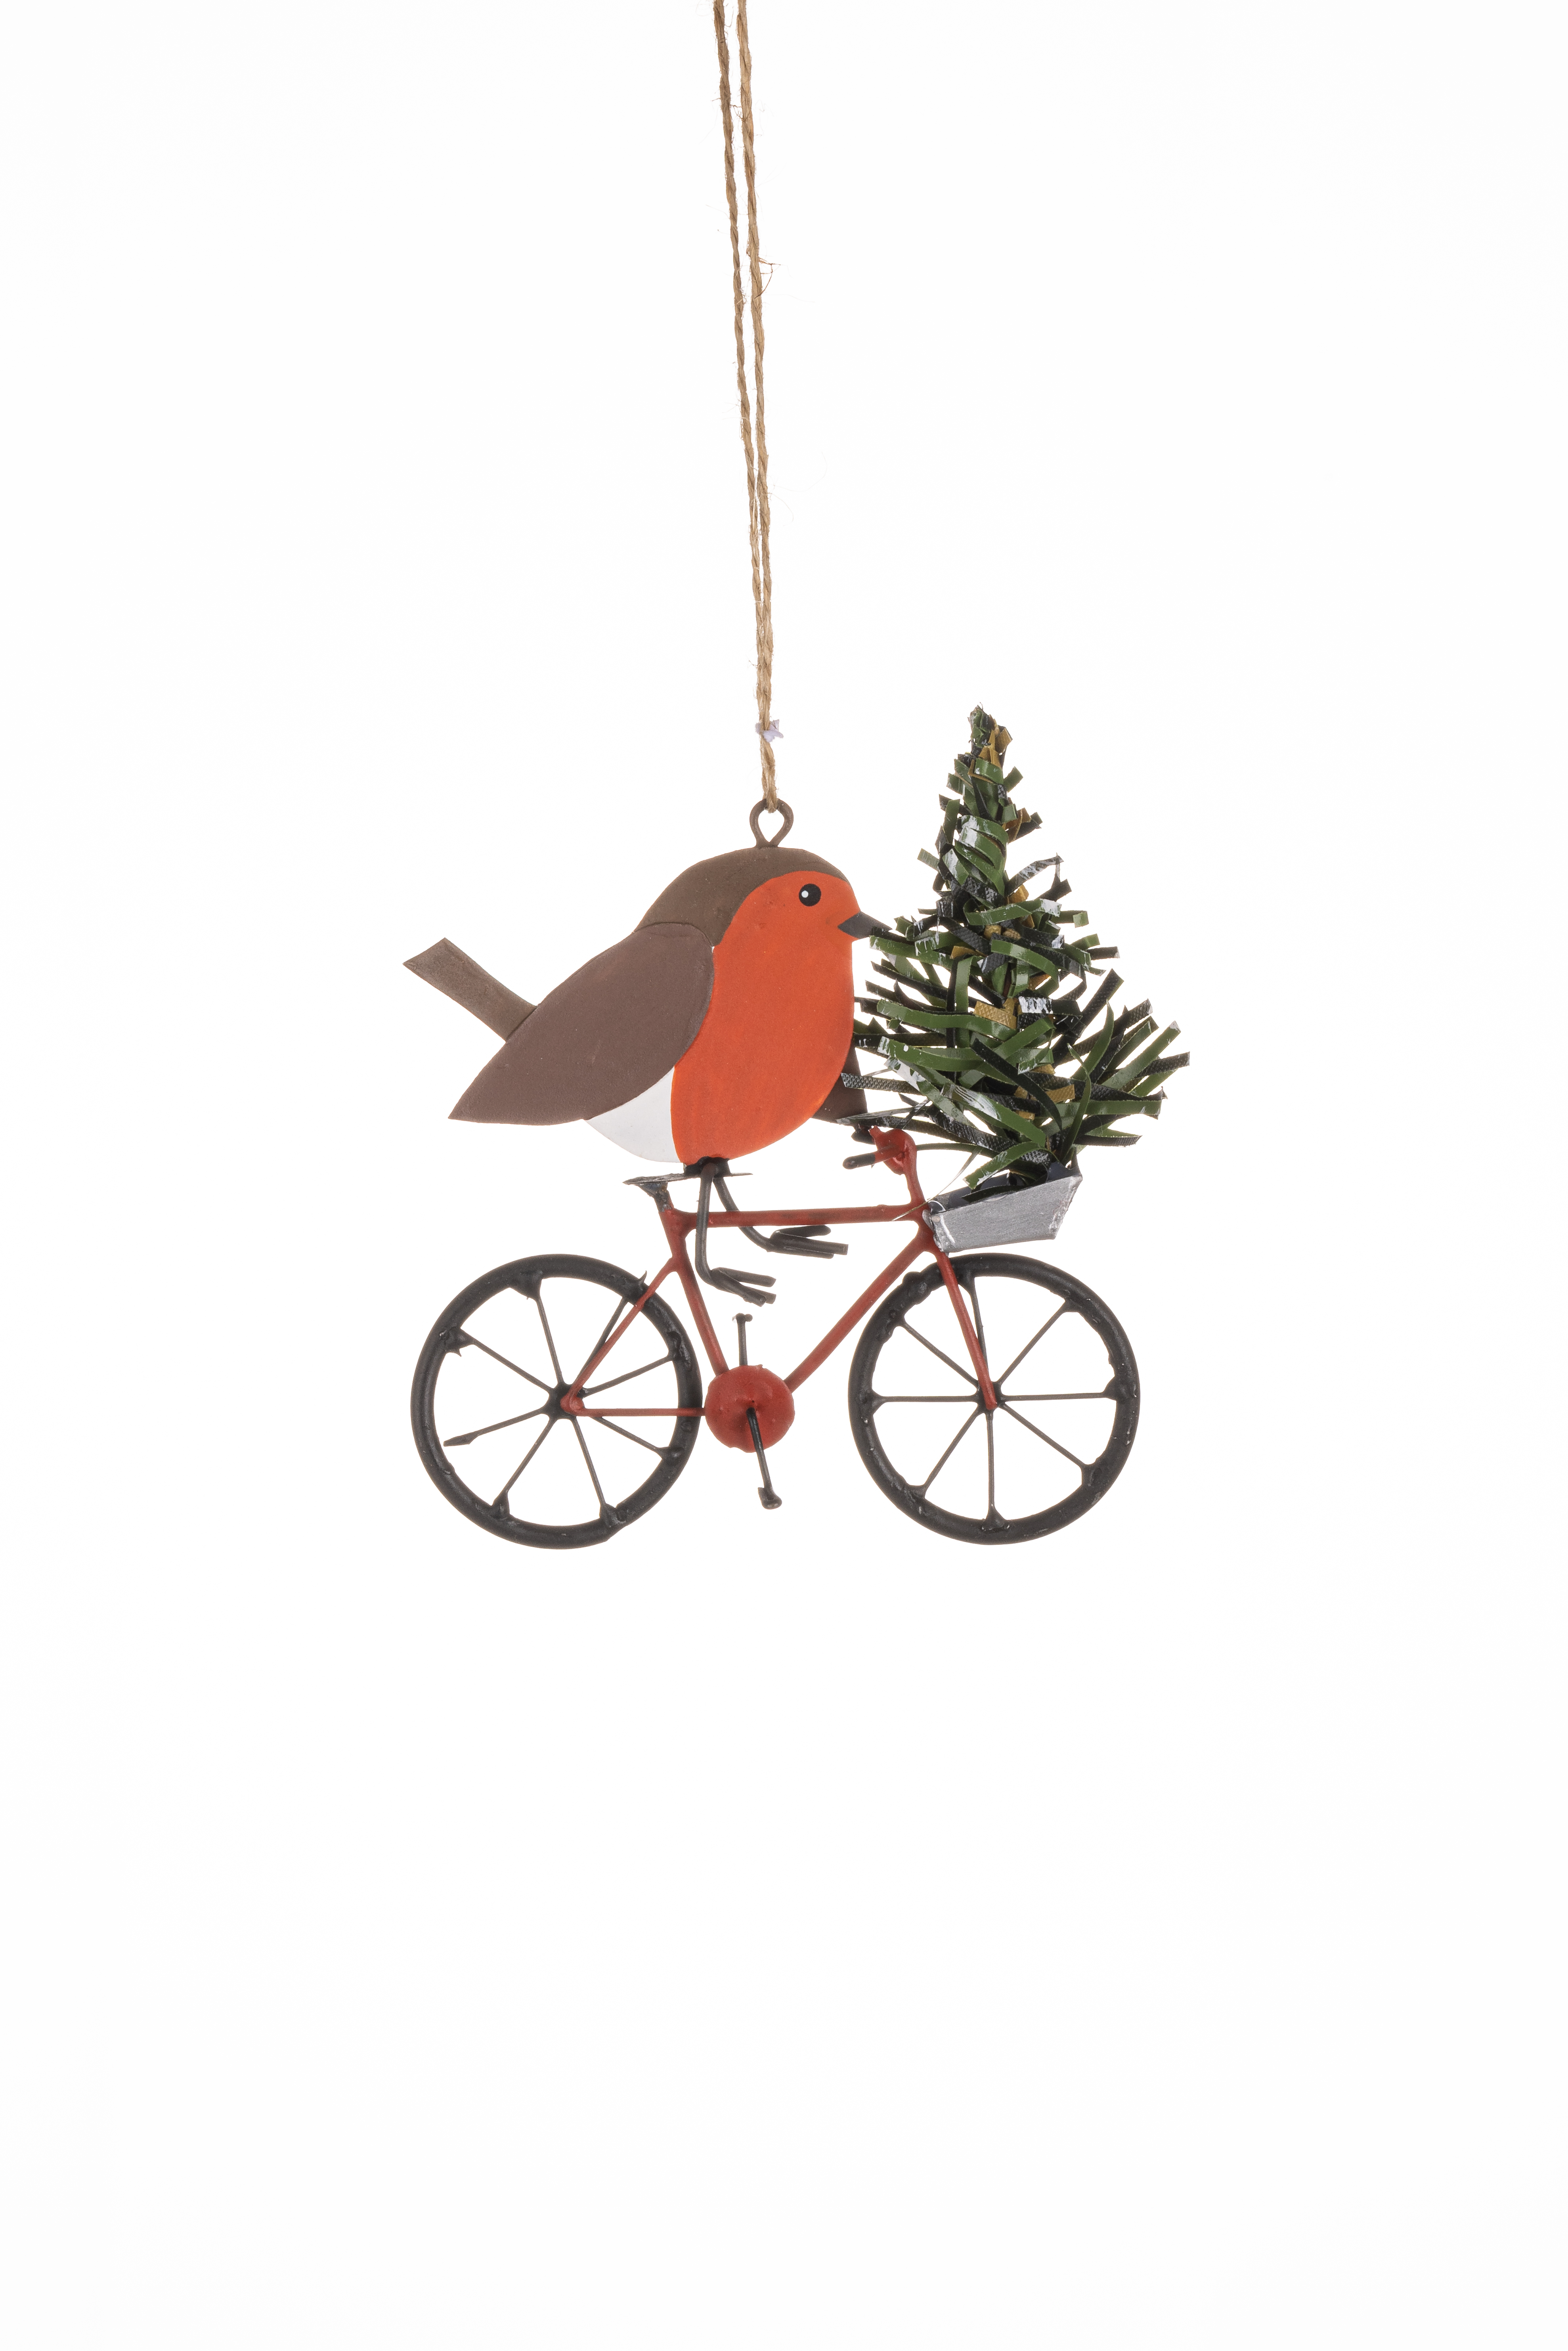 Shoeless Joe Metal Robin on Bike Novelty Christmas Tree Decoration